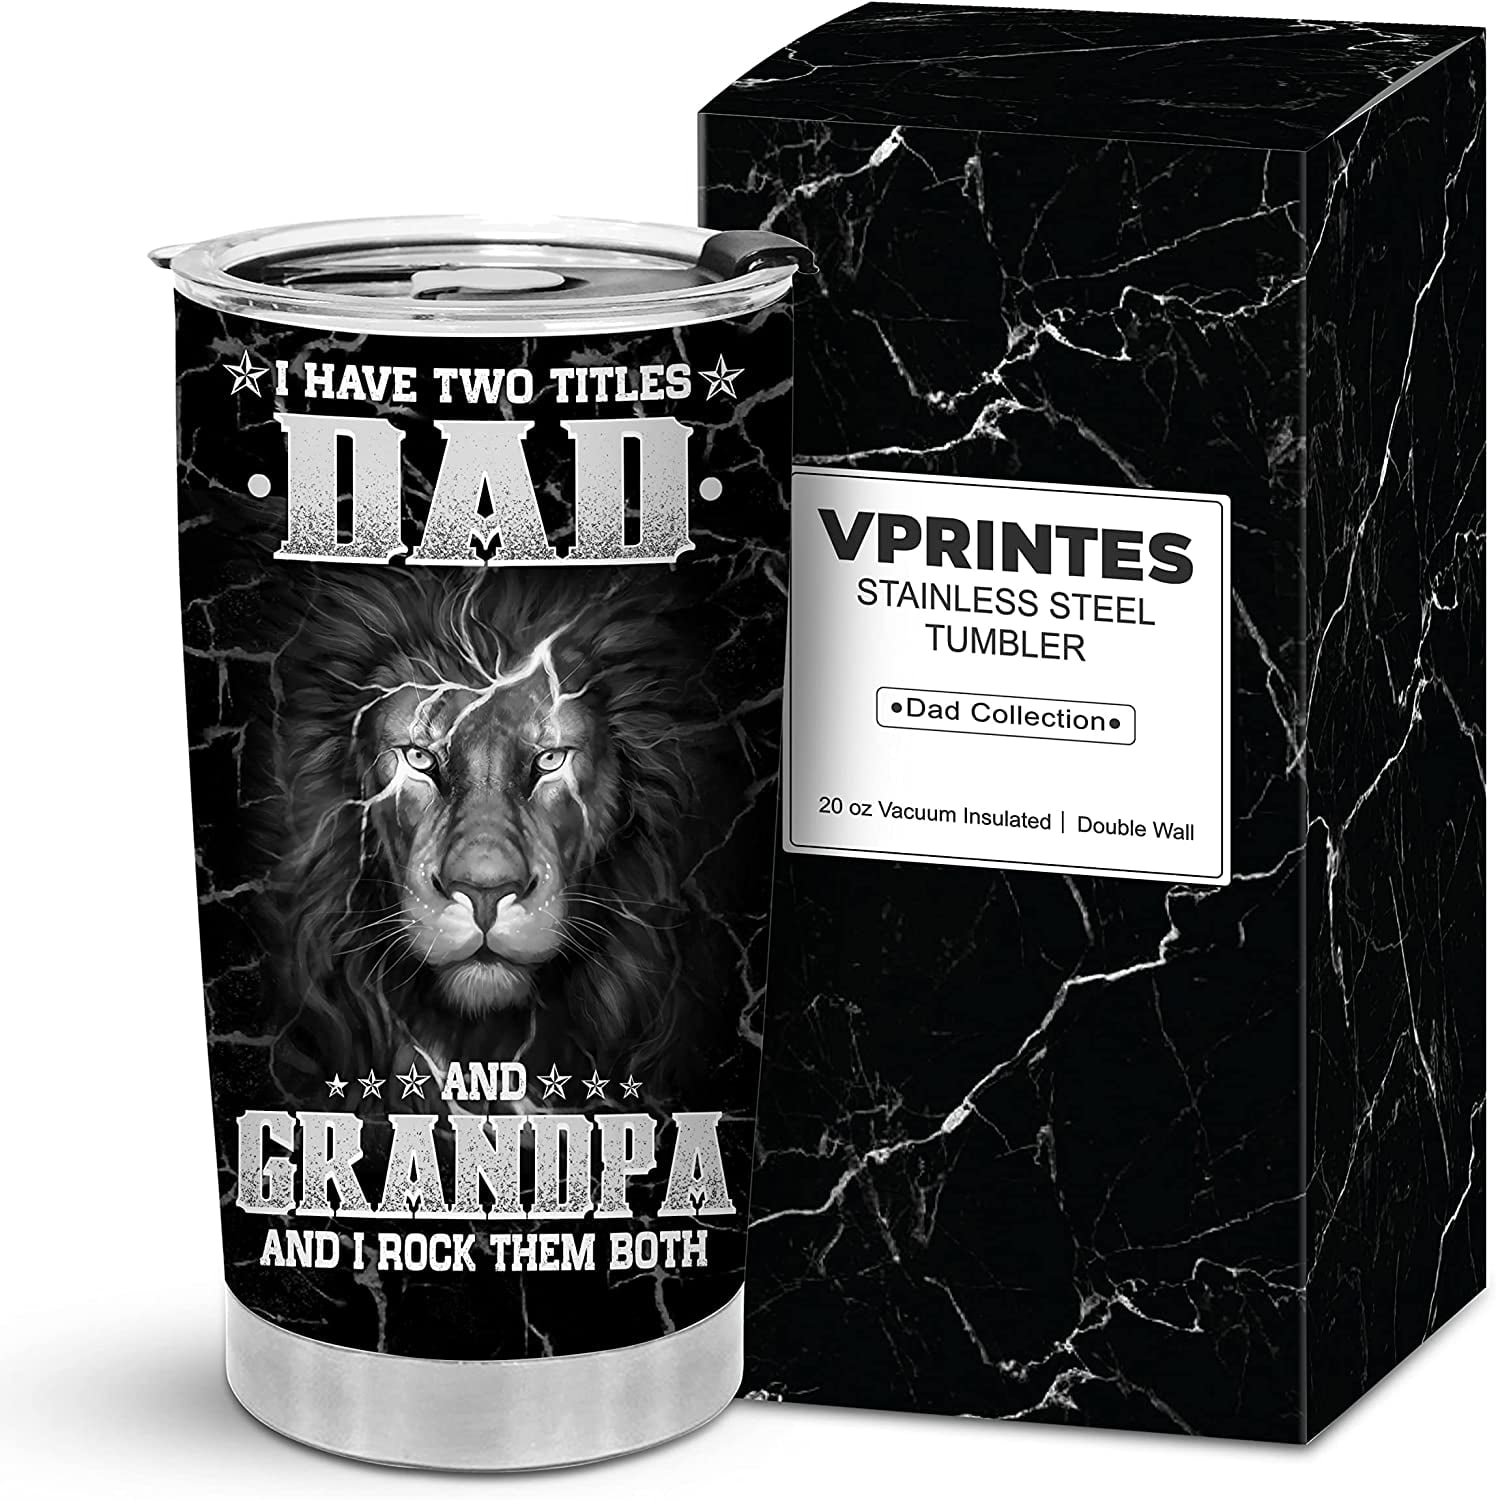 Best Grandpa Ever Travel Coffee Mug Father's Day Gift Tumbler 20 Oz Travel  Mug ET0029 